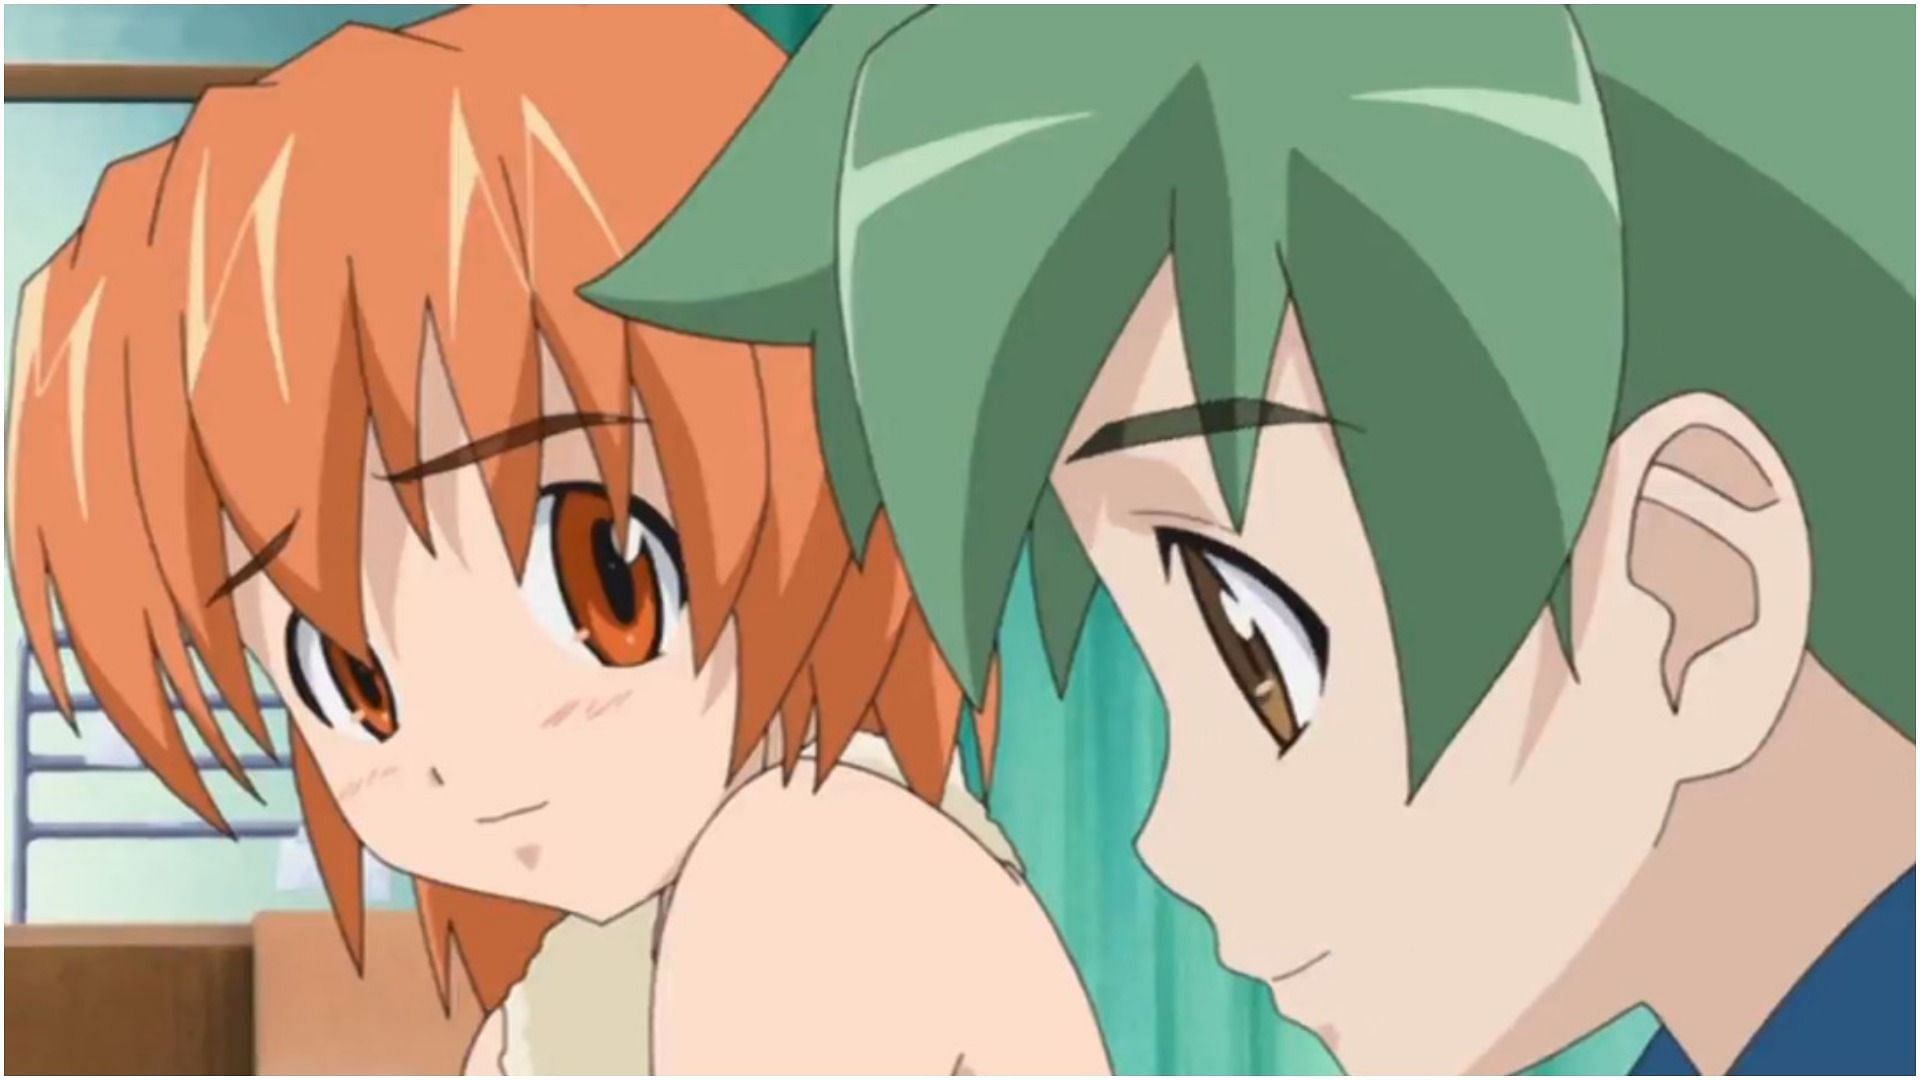 Takasu Ayako and Yoshimura Mamoru, as seen in the anime (Image via Zexcs)